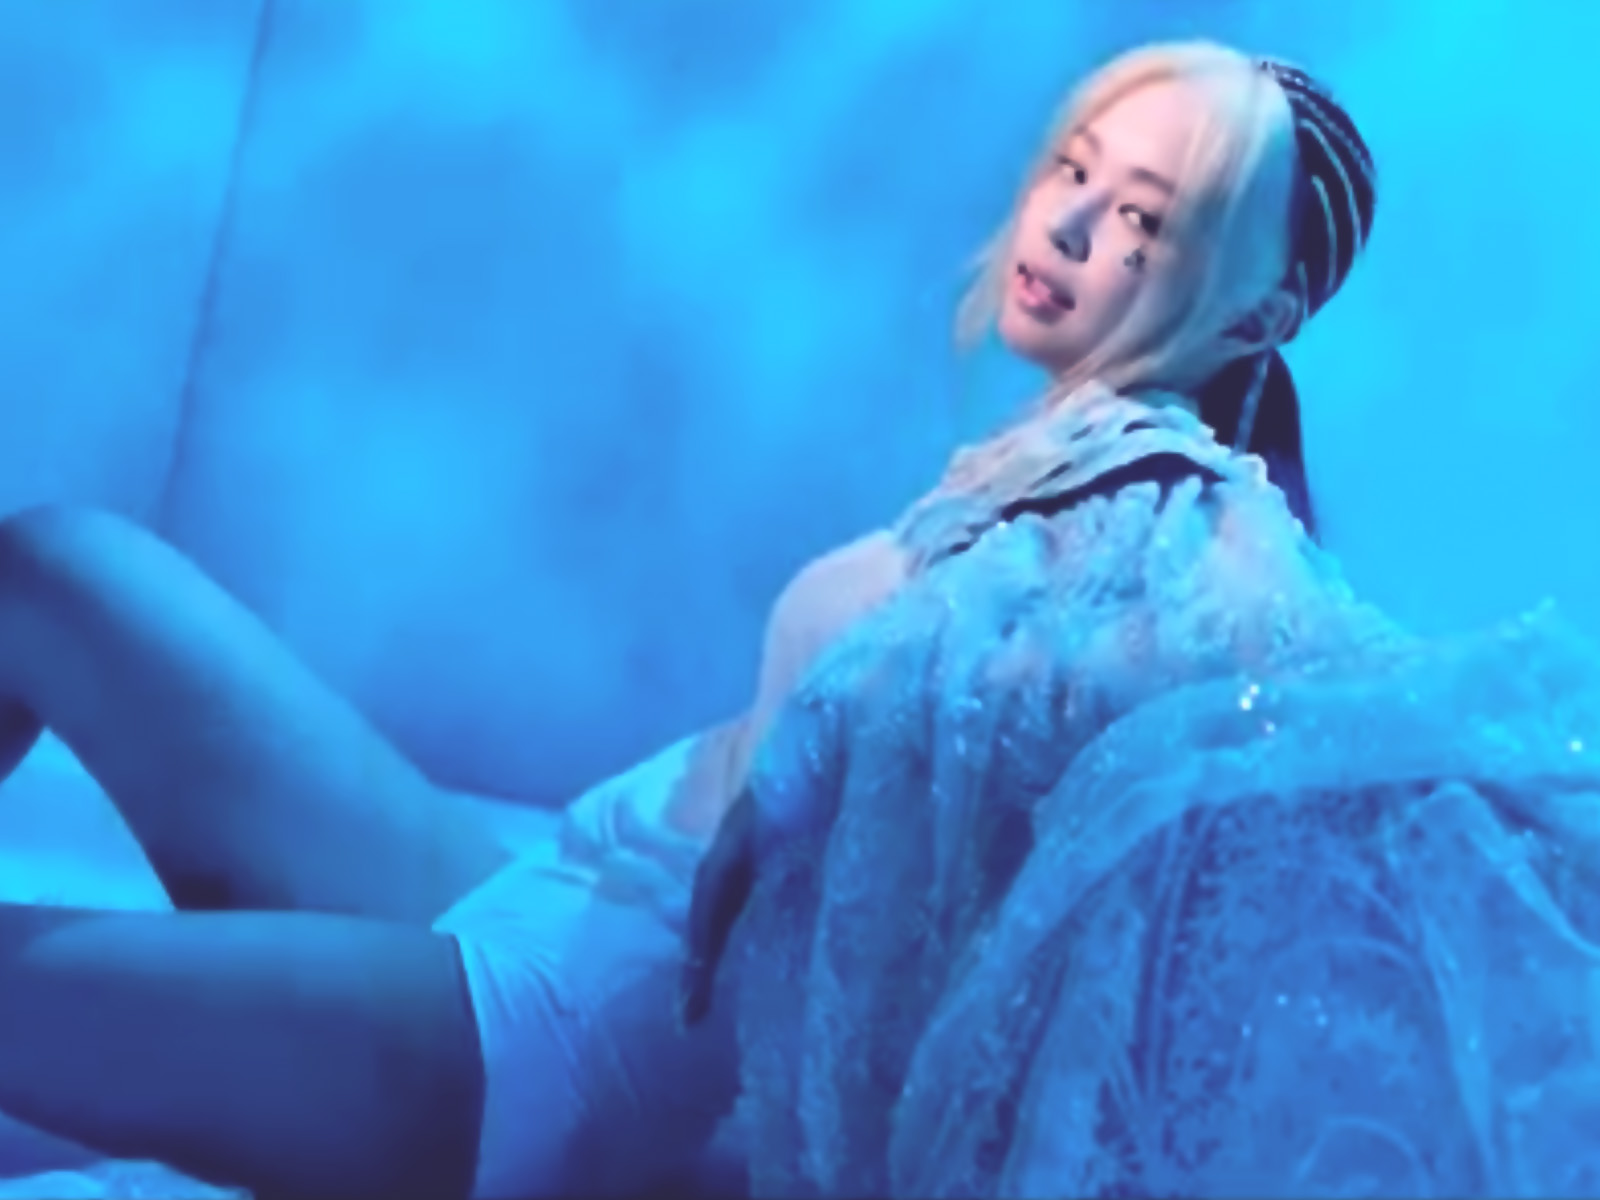 Dress Up Like Jennie in How You Like That MV Fashion Request